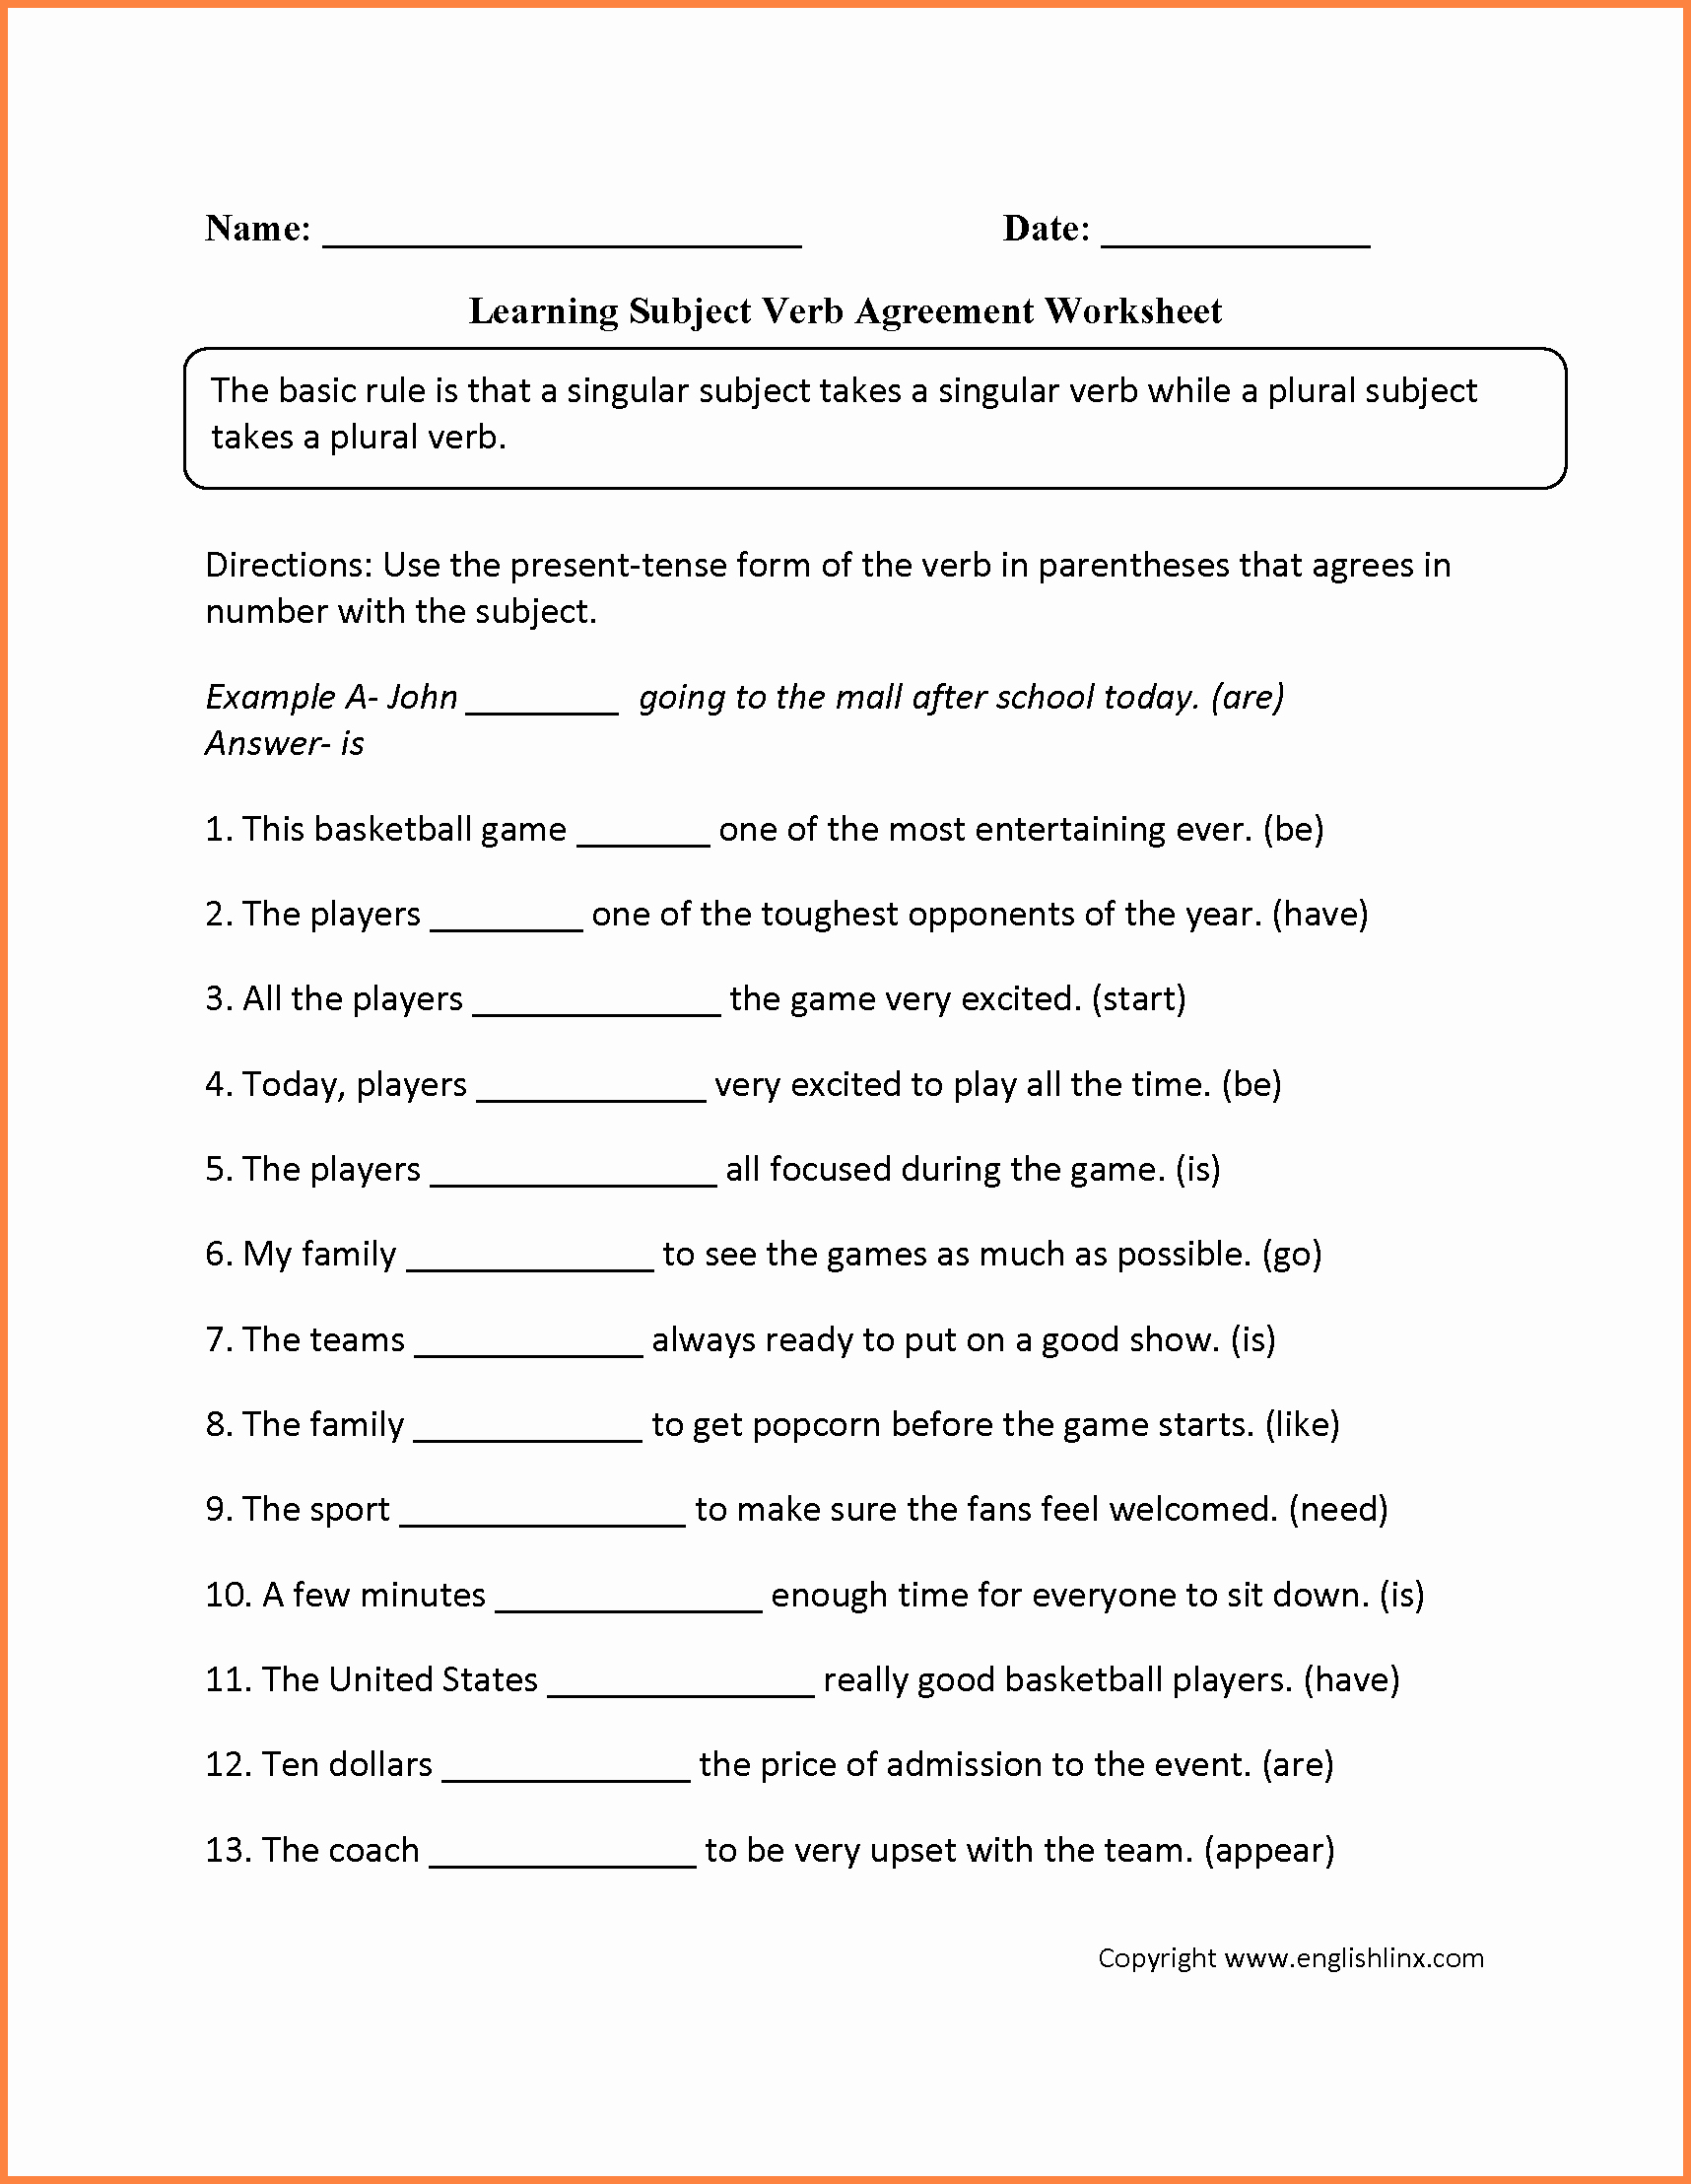 Subject Verb Agreement Worksheet Unique 5 Subject Verb Agreement Worksheets for Kids